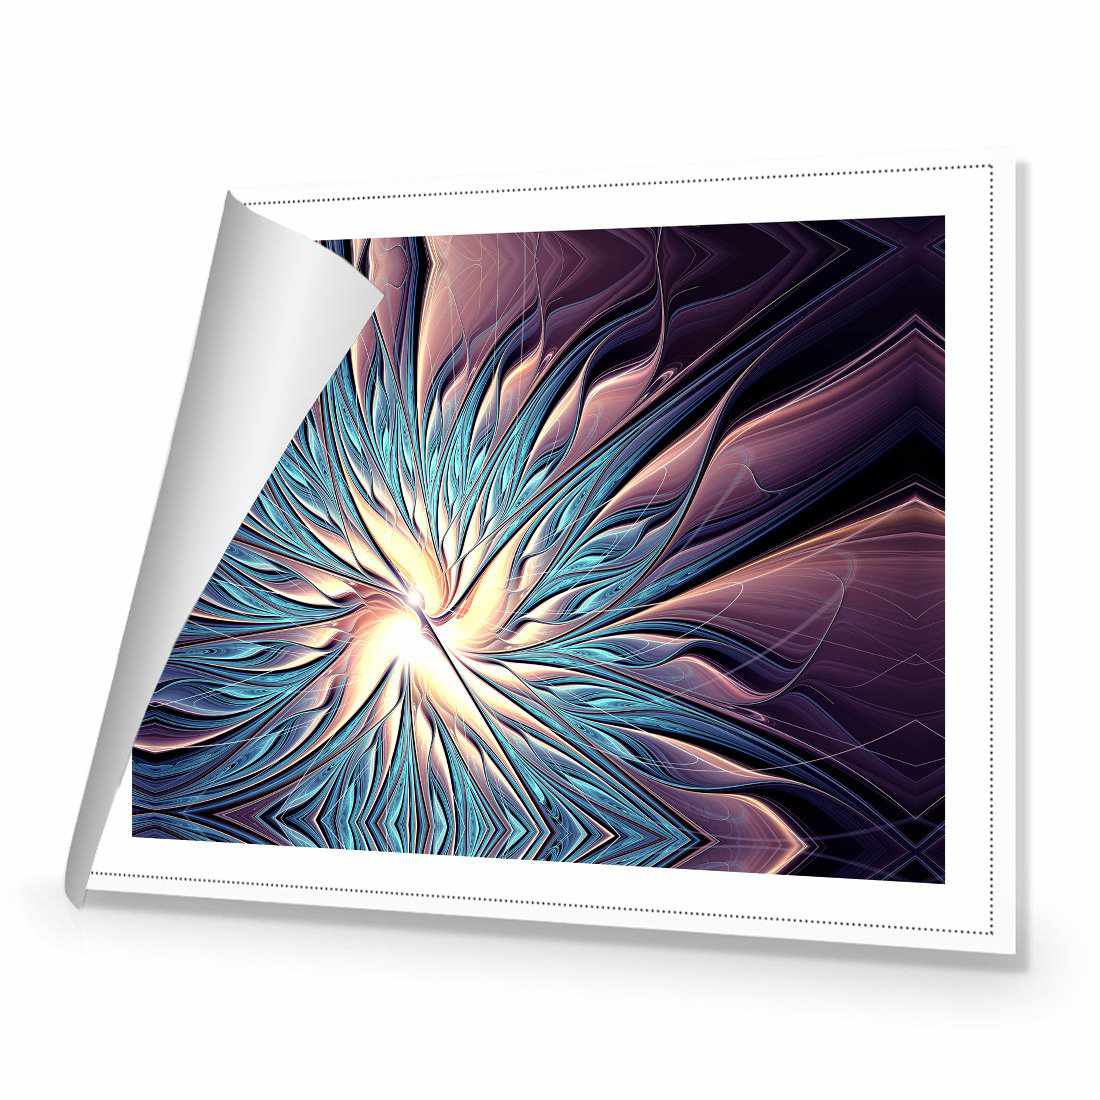 Shining Soul Canvas Art-Canvas-Wall Art Designs-45x30cm-Rolled Canvas-Wall Art Designs